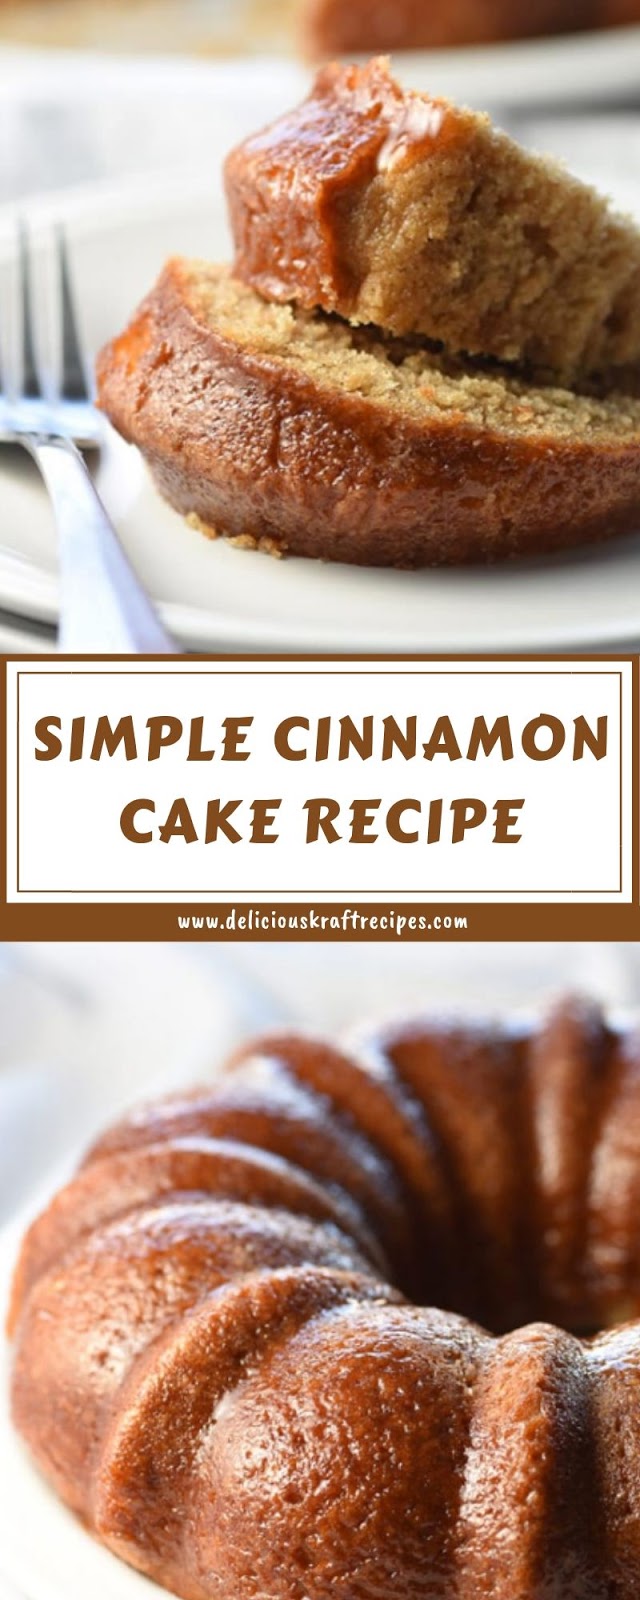 SIMPLE CINNAMON CAKE RECIPE